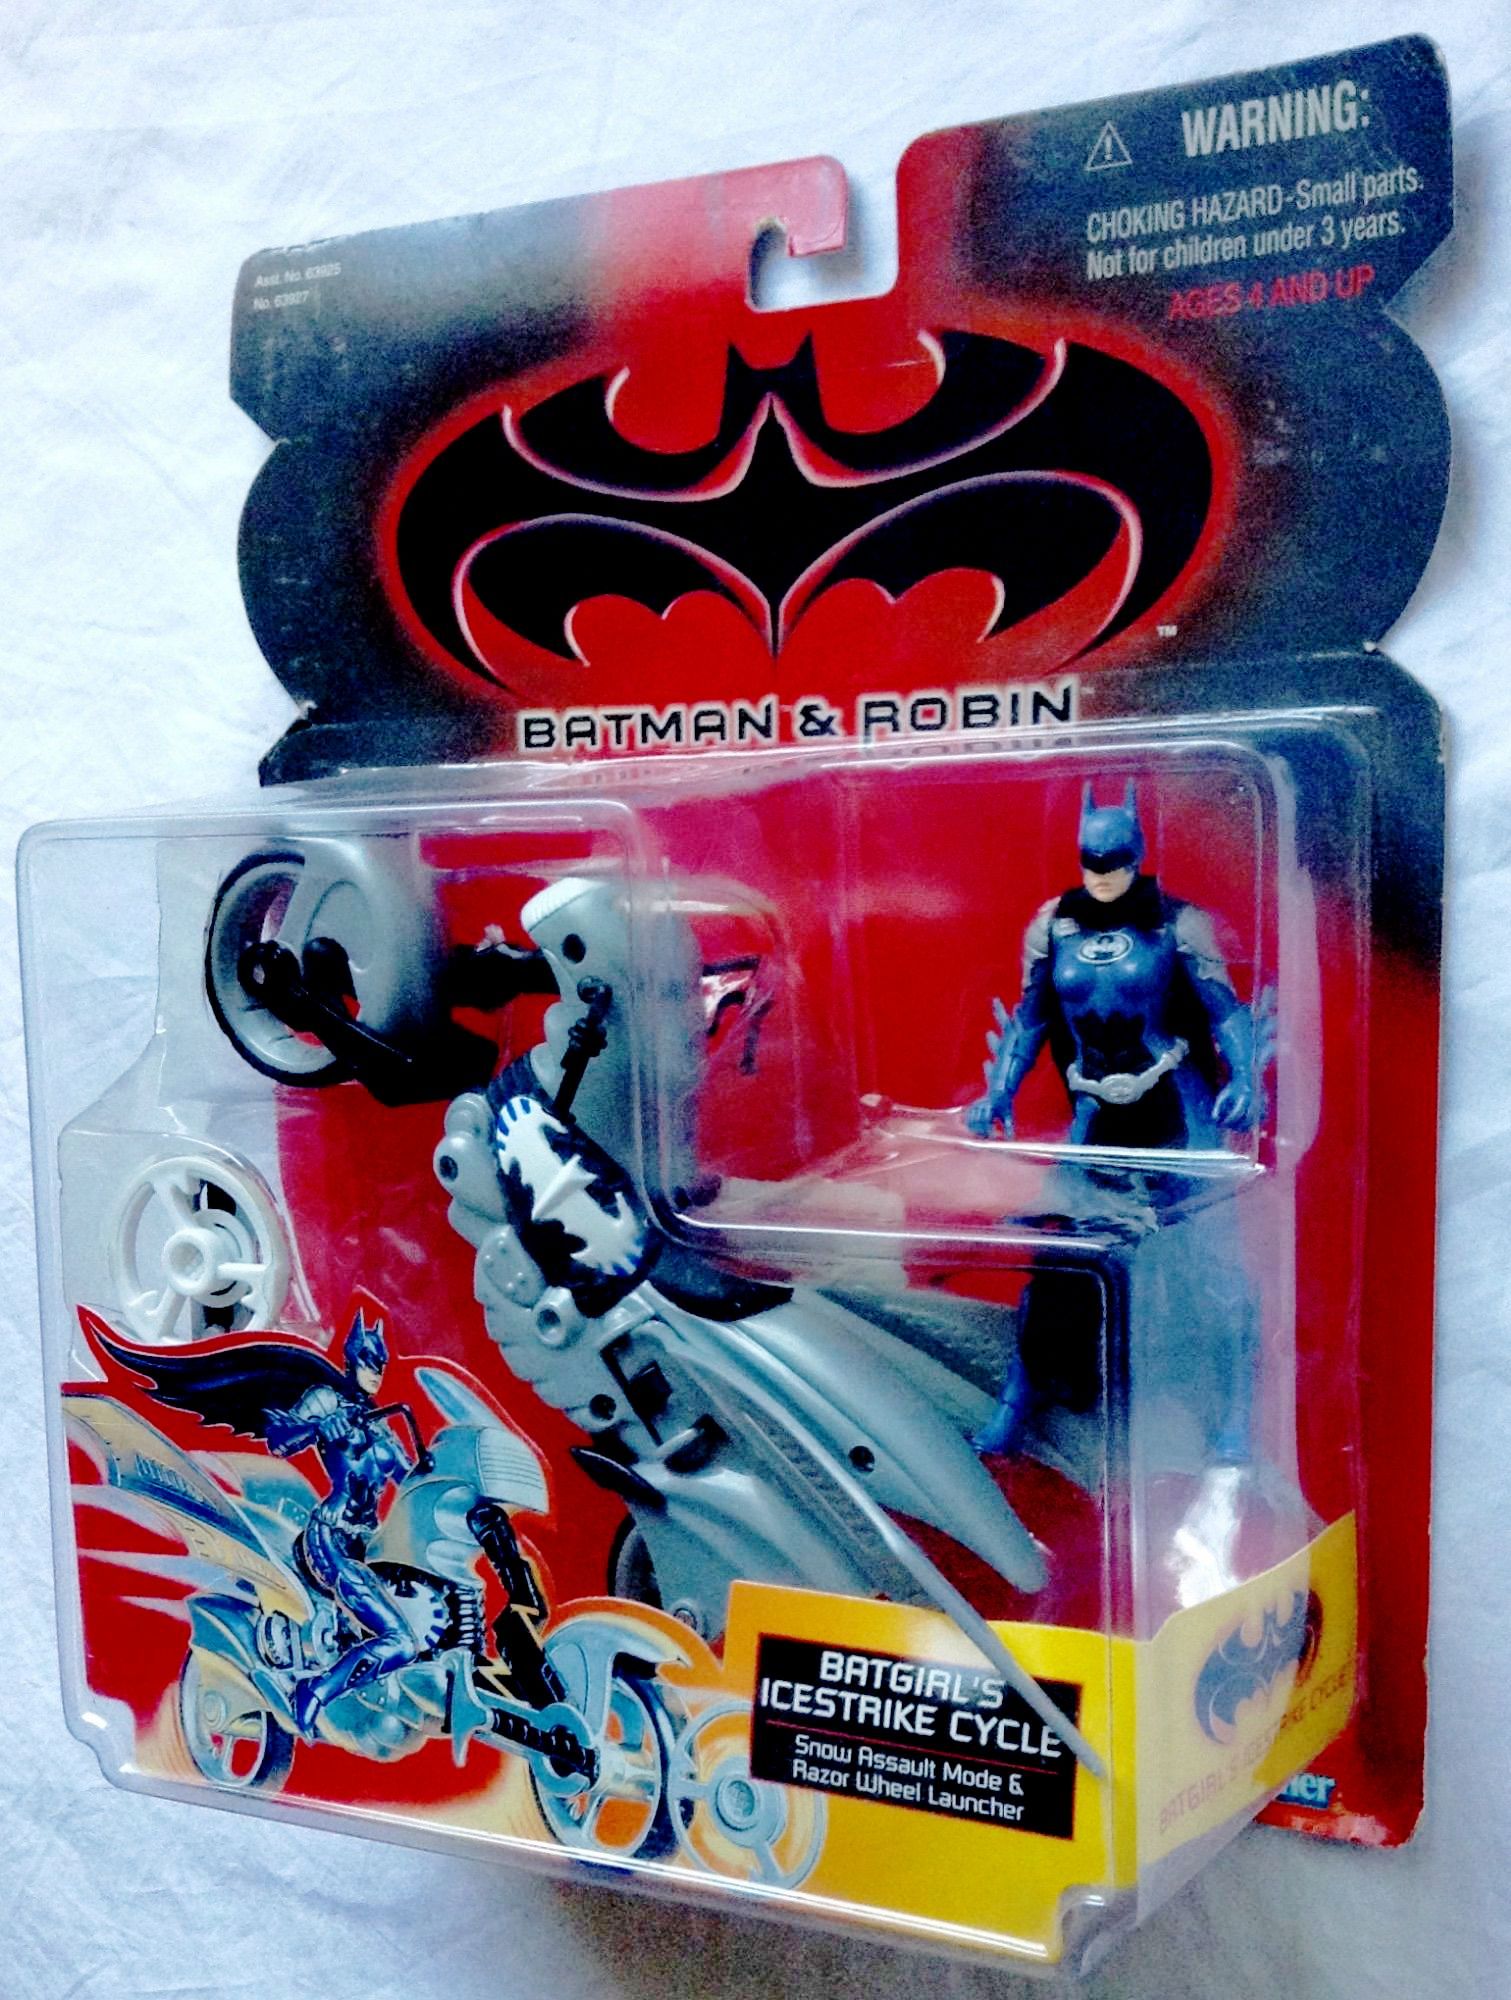 PVC Keychain Figures 1 each1992 BATMAN RETURNS and 1 BATGIRL